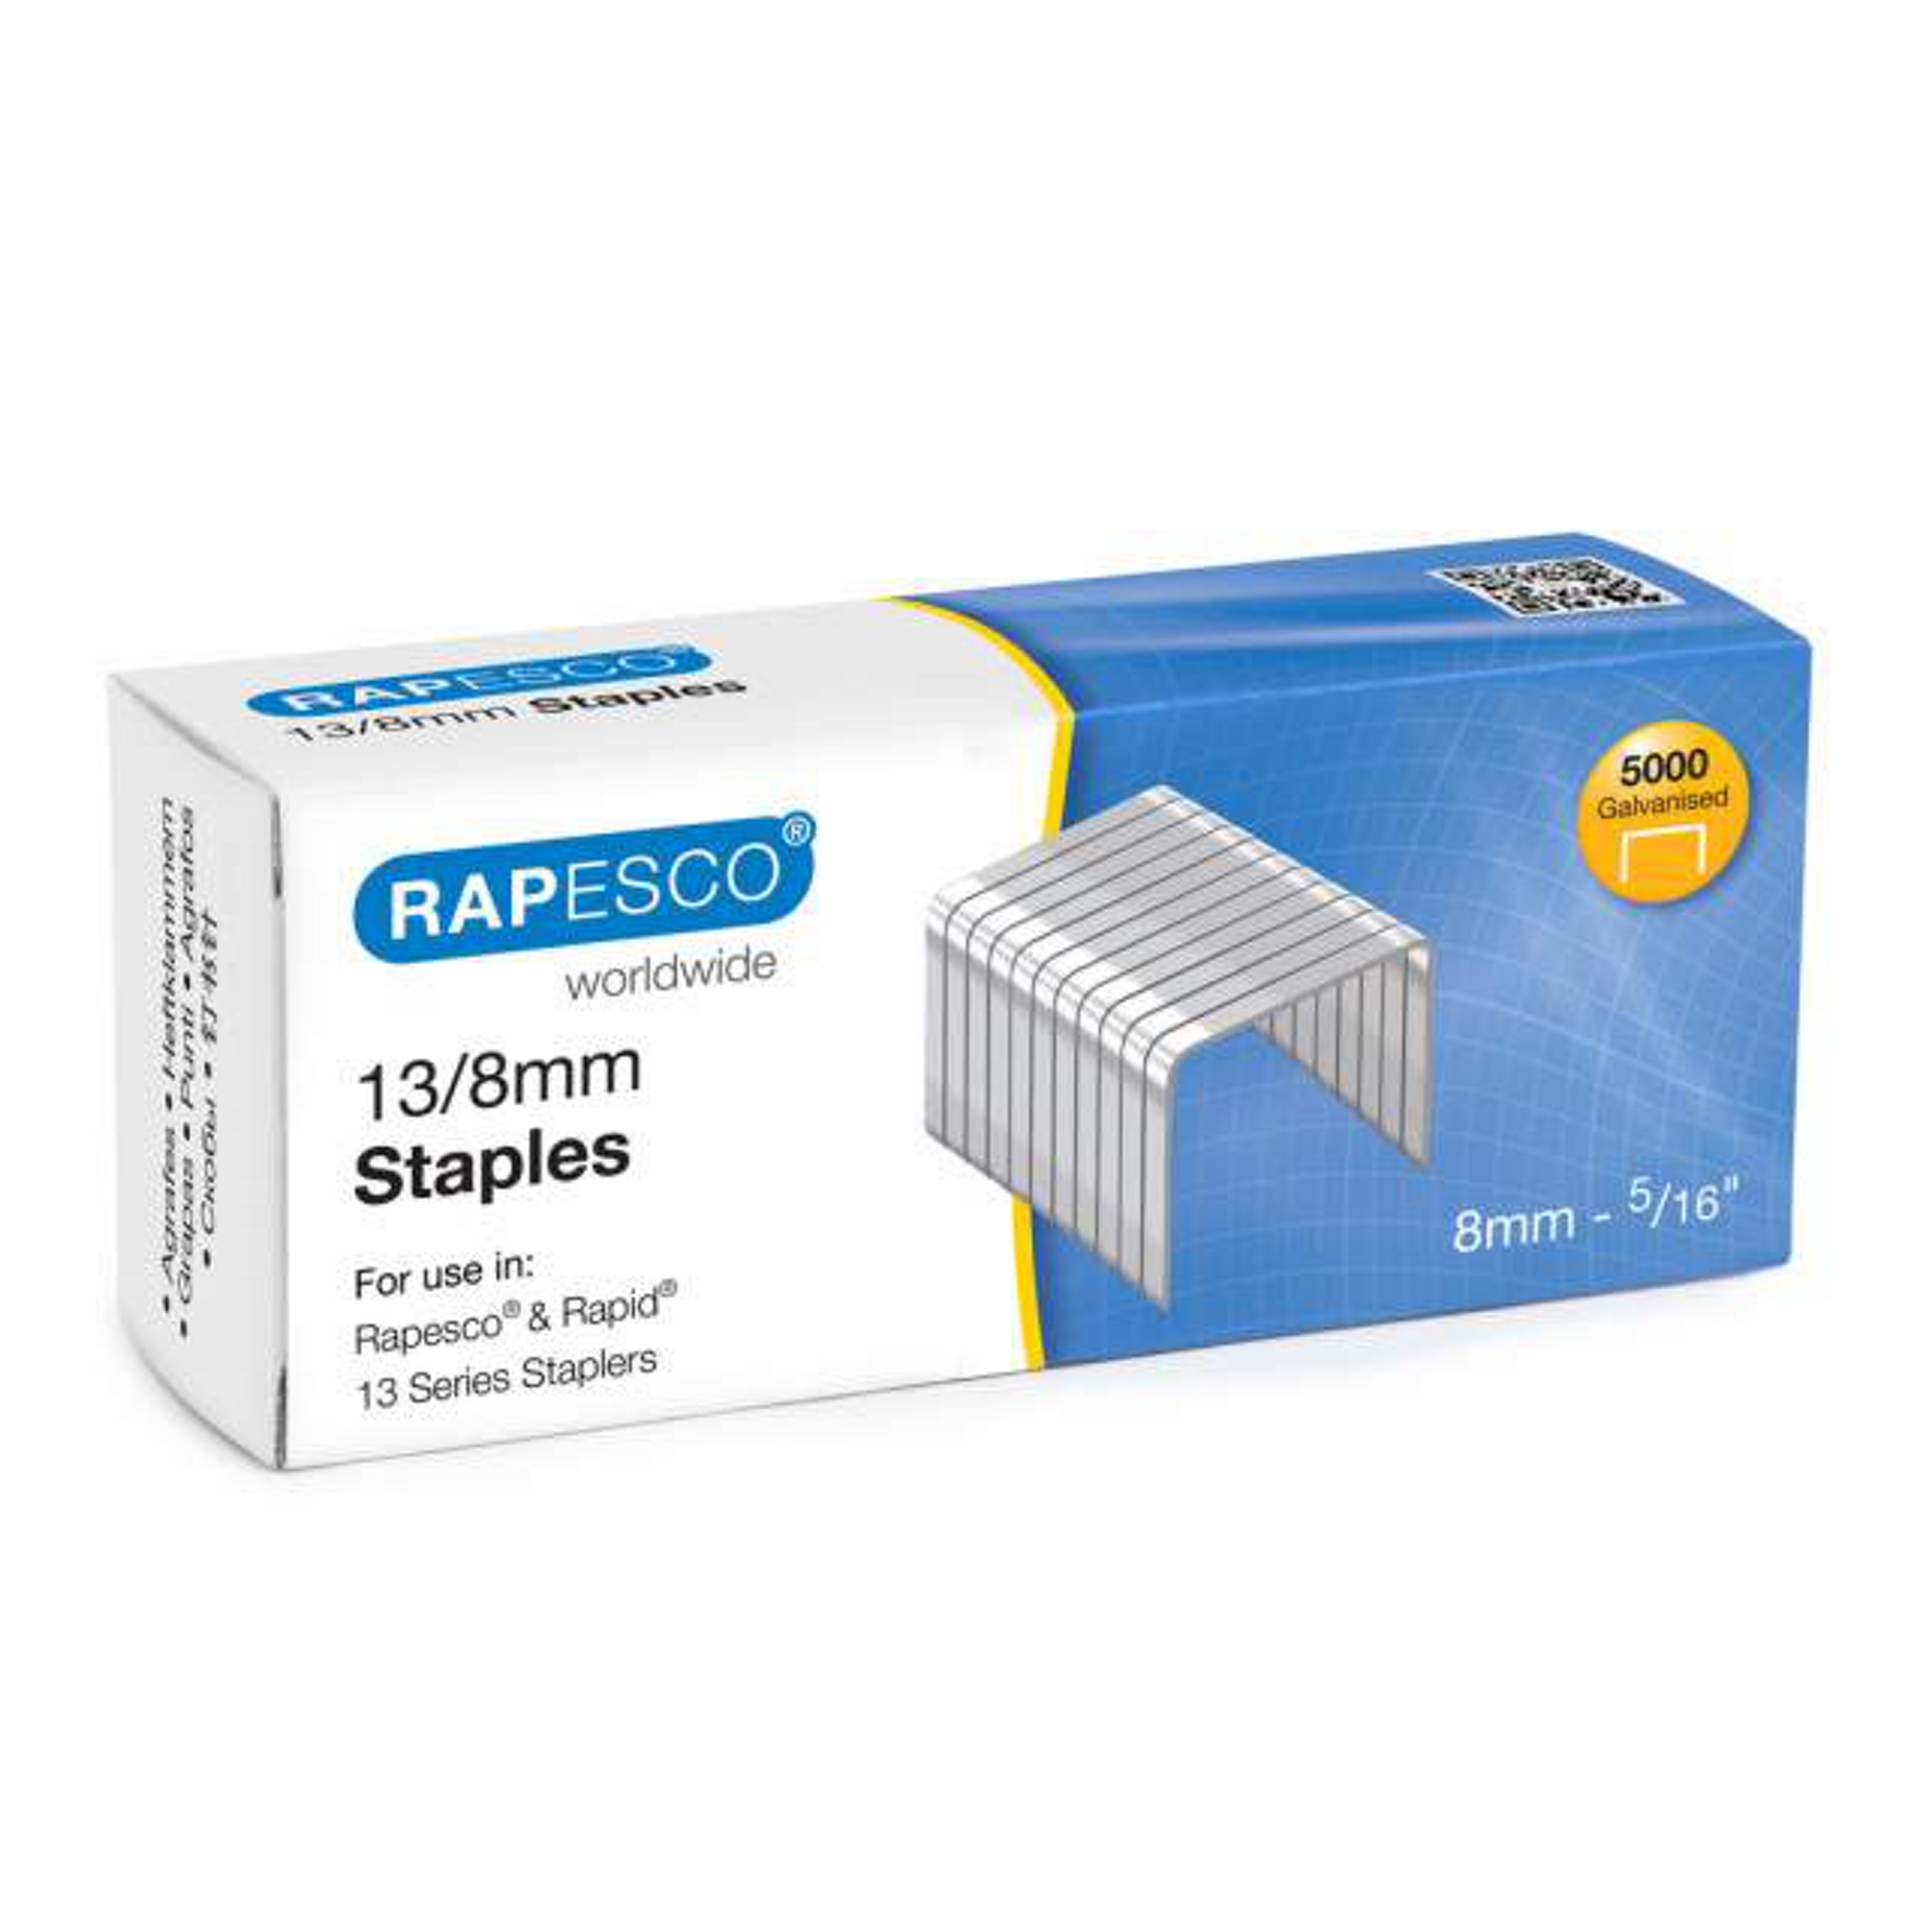 Rapesco 13/8 Staples P5000